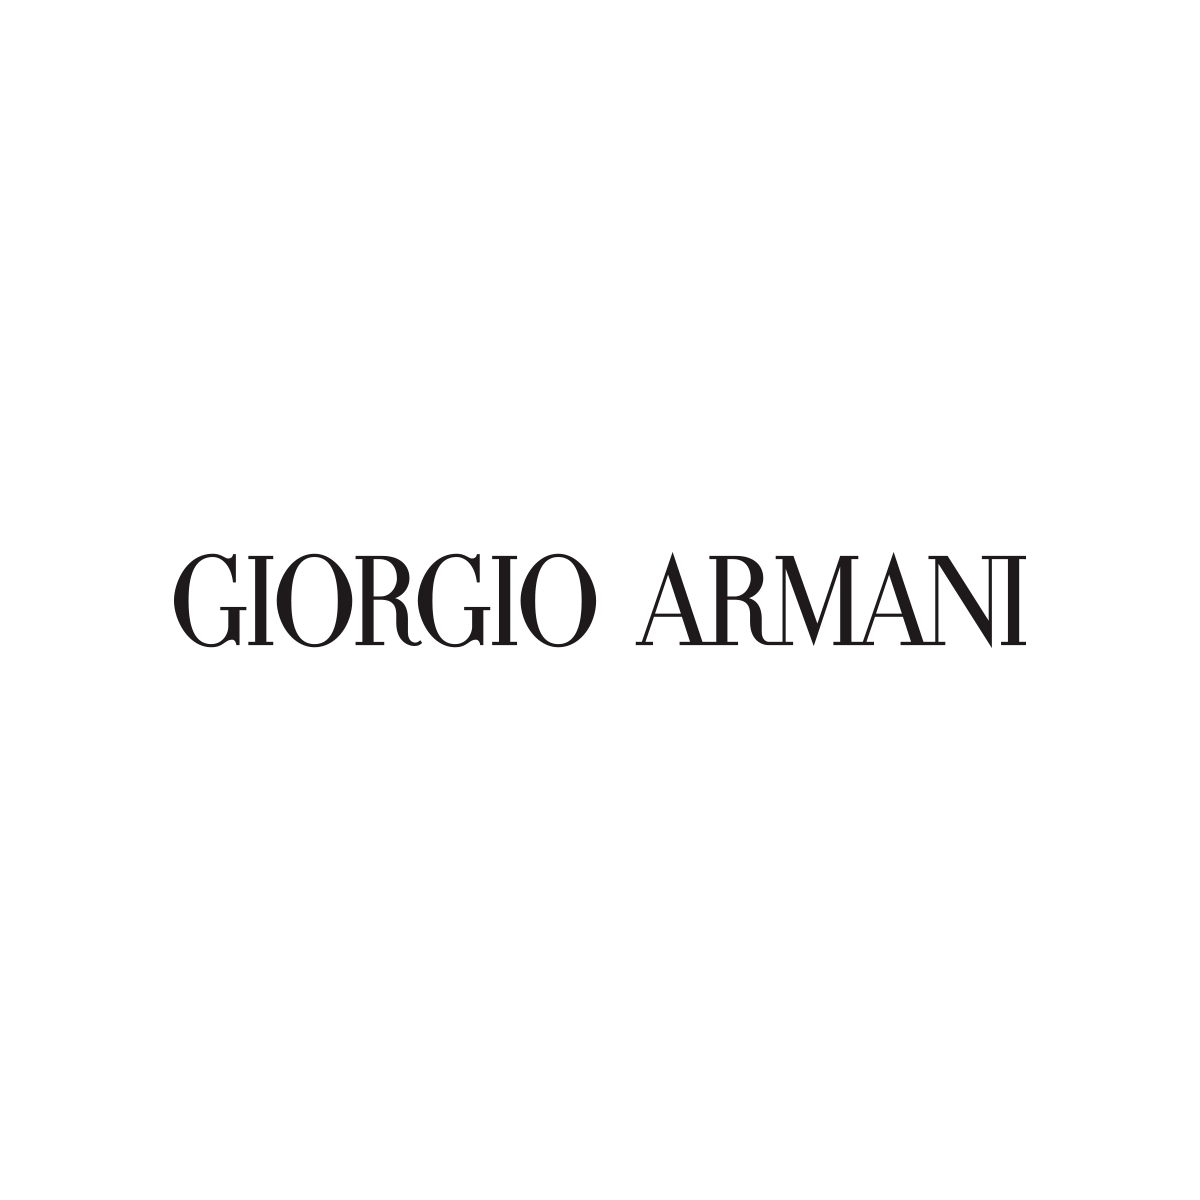 Giorgio Armani - Grossistes et fabricants de vêtements